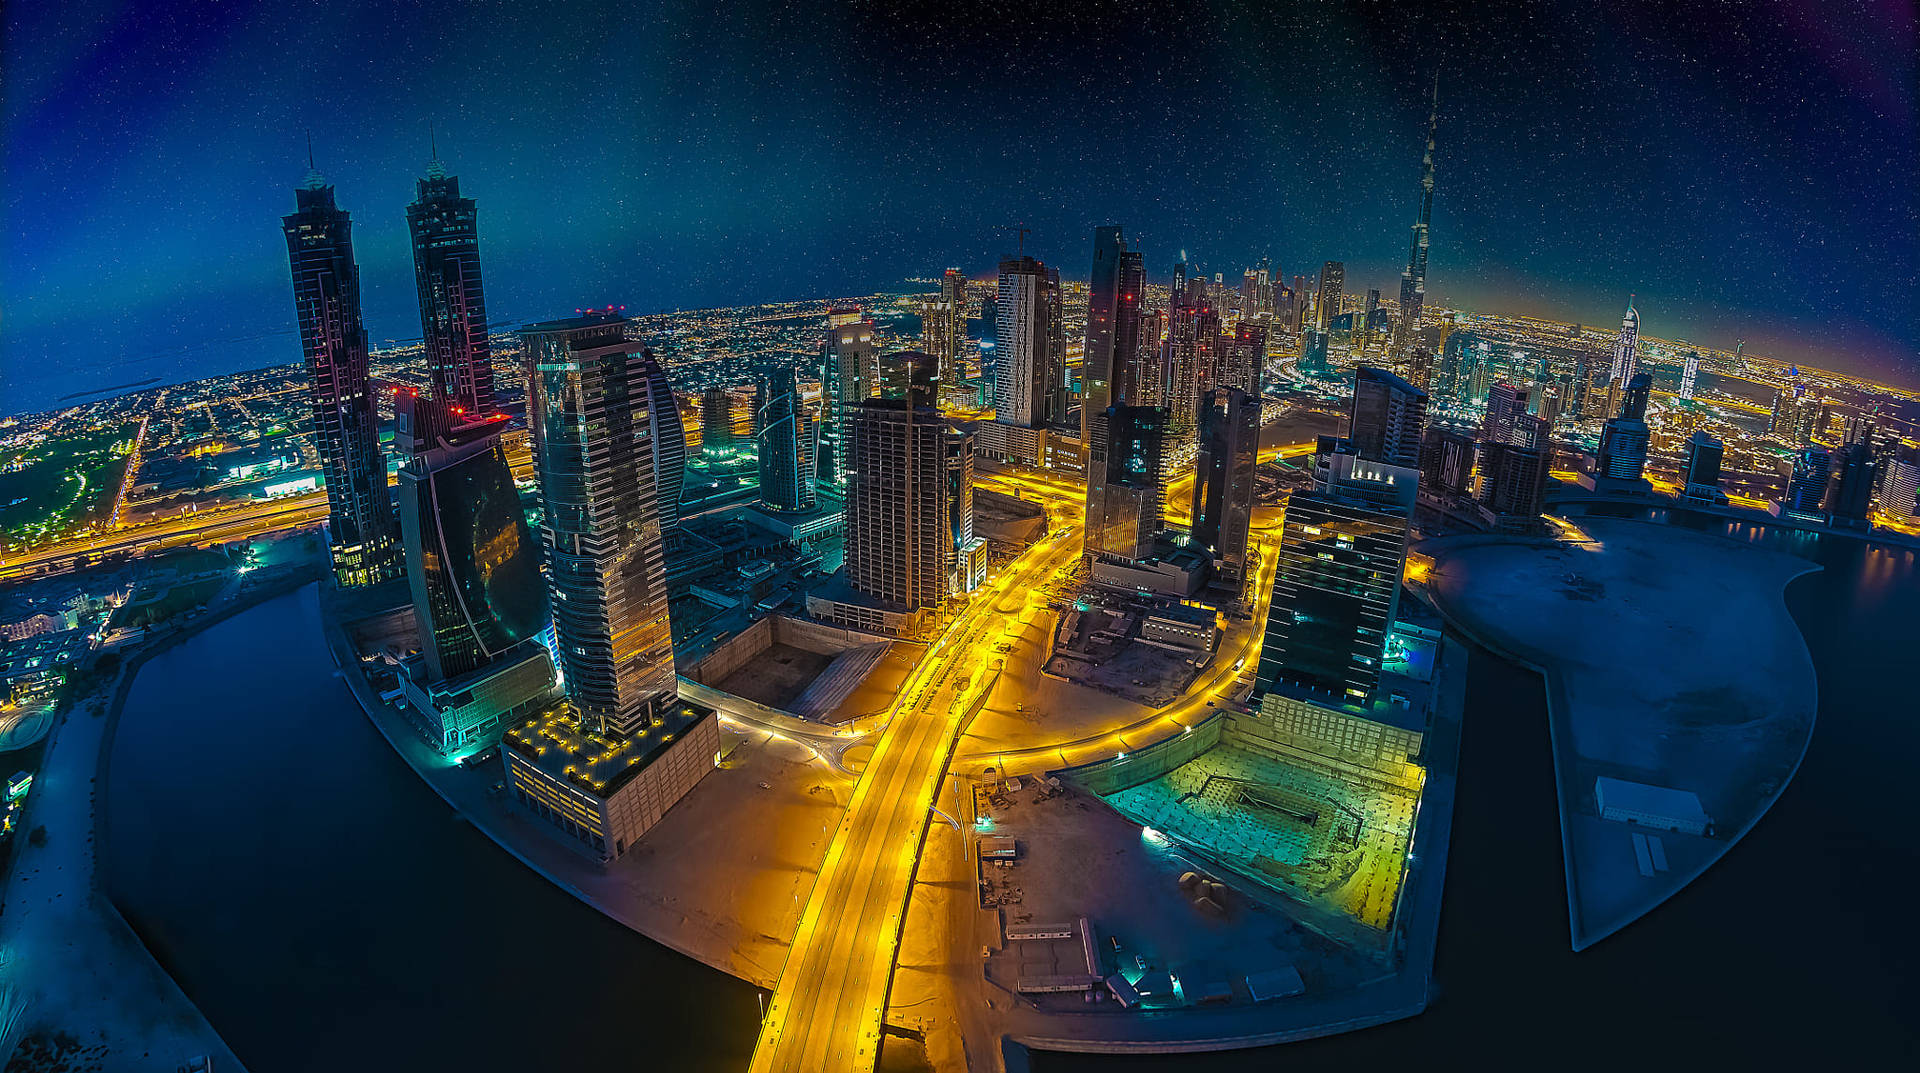 Dubai City View